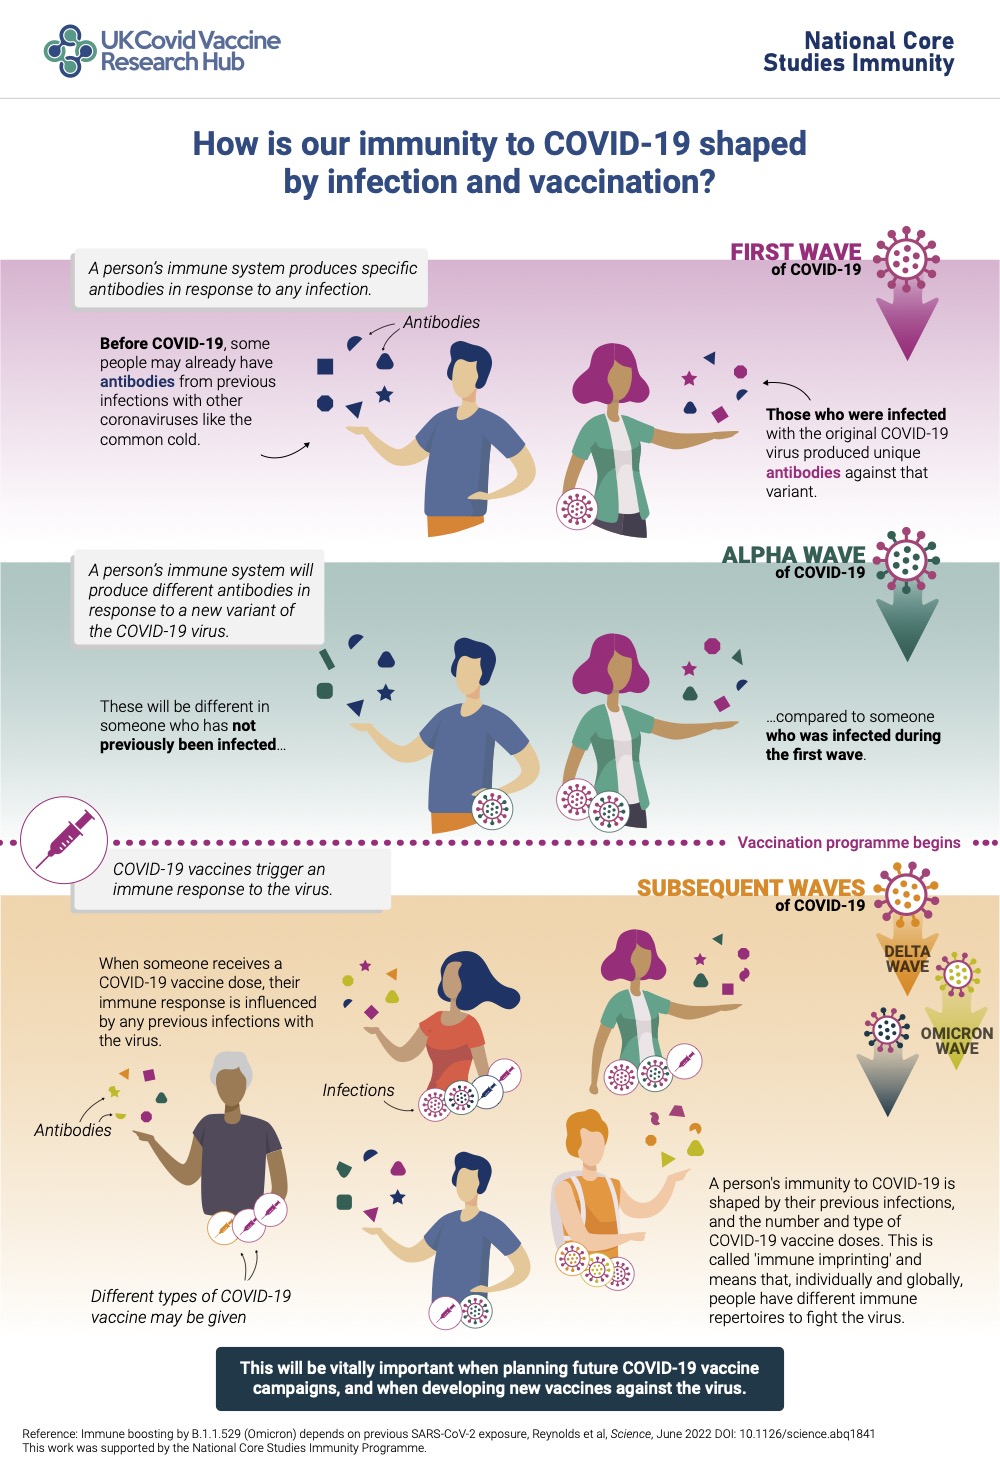 Infographic explaining concept of immune imprinting